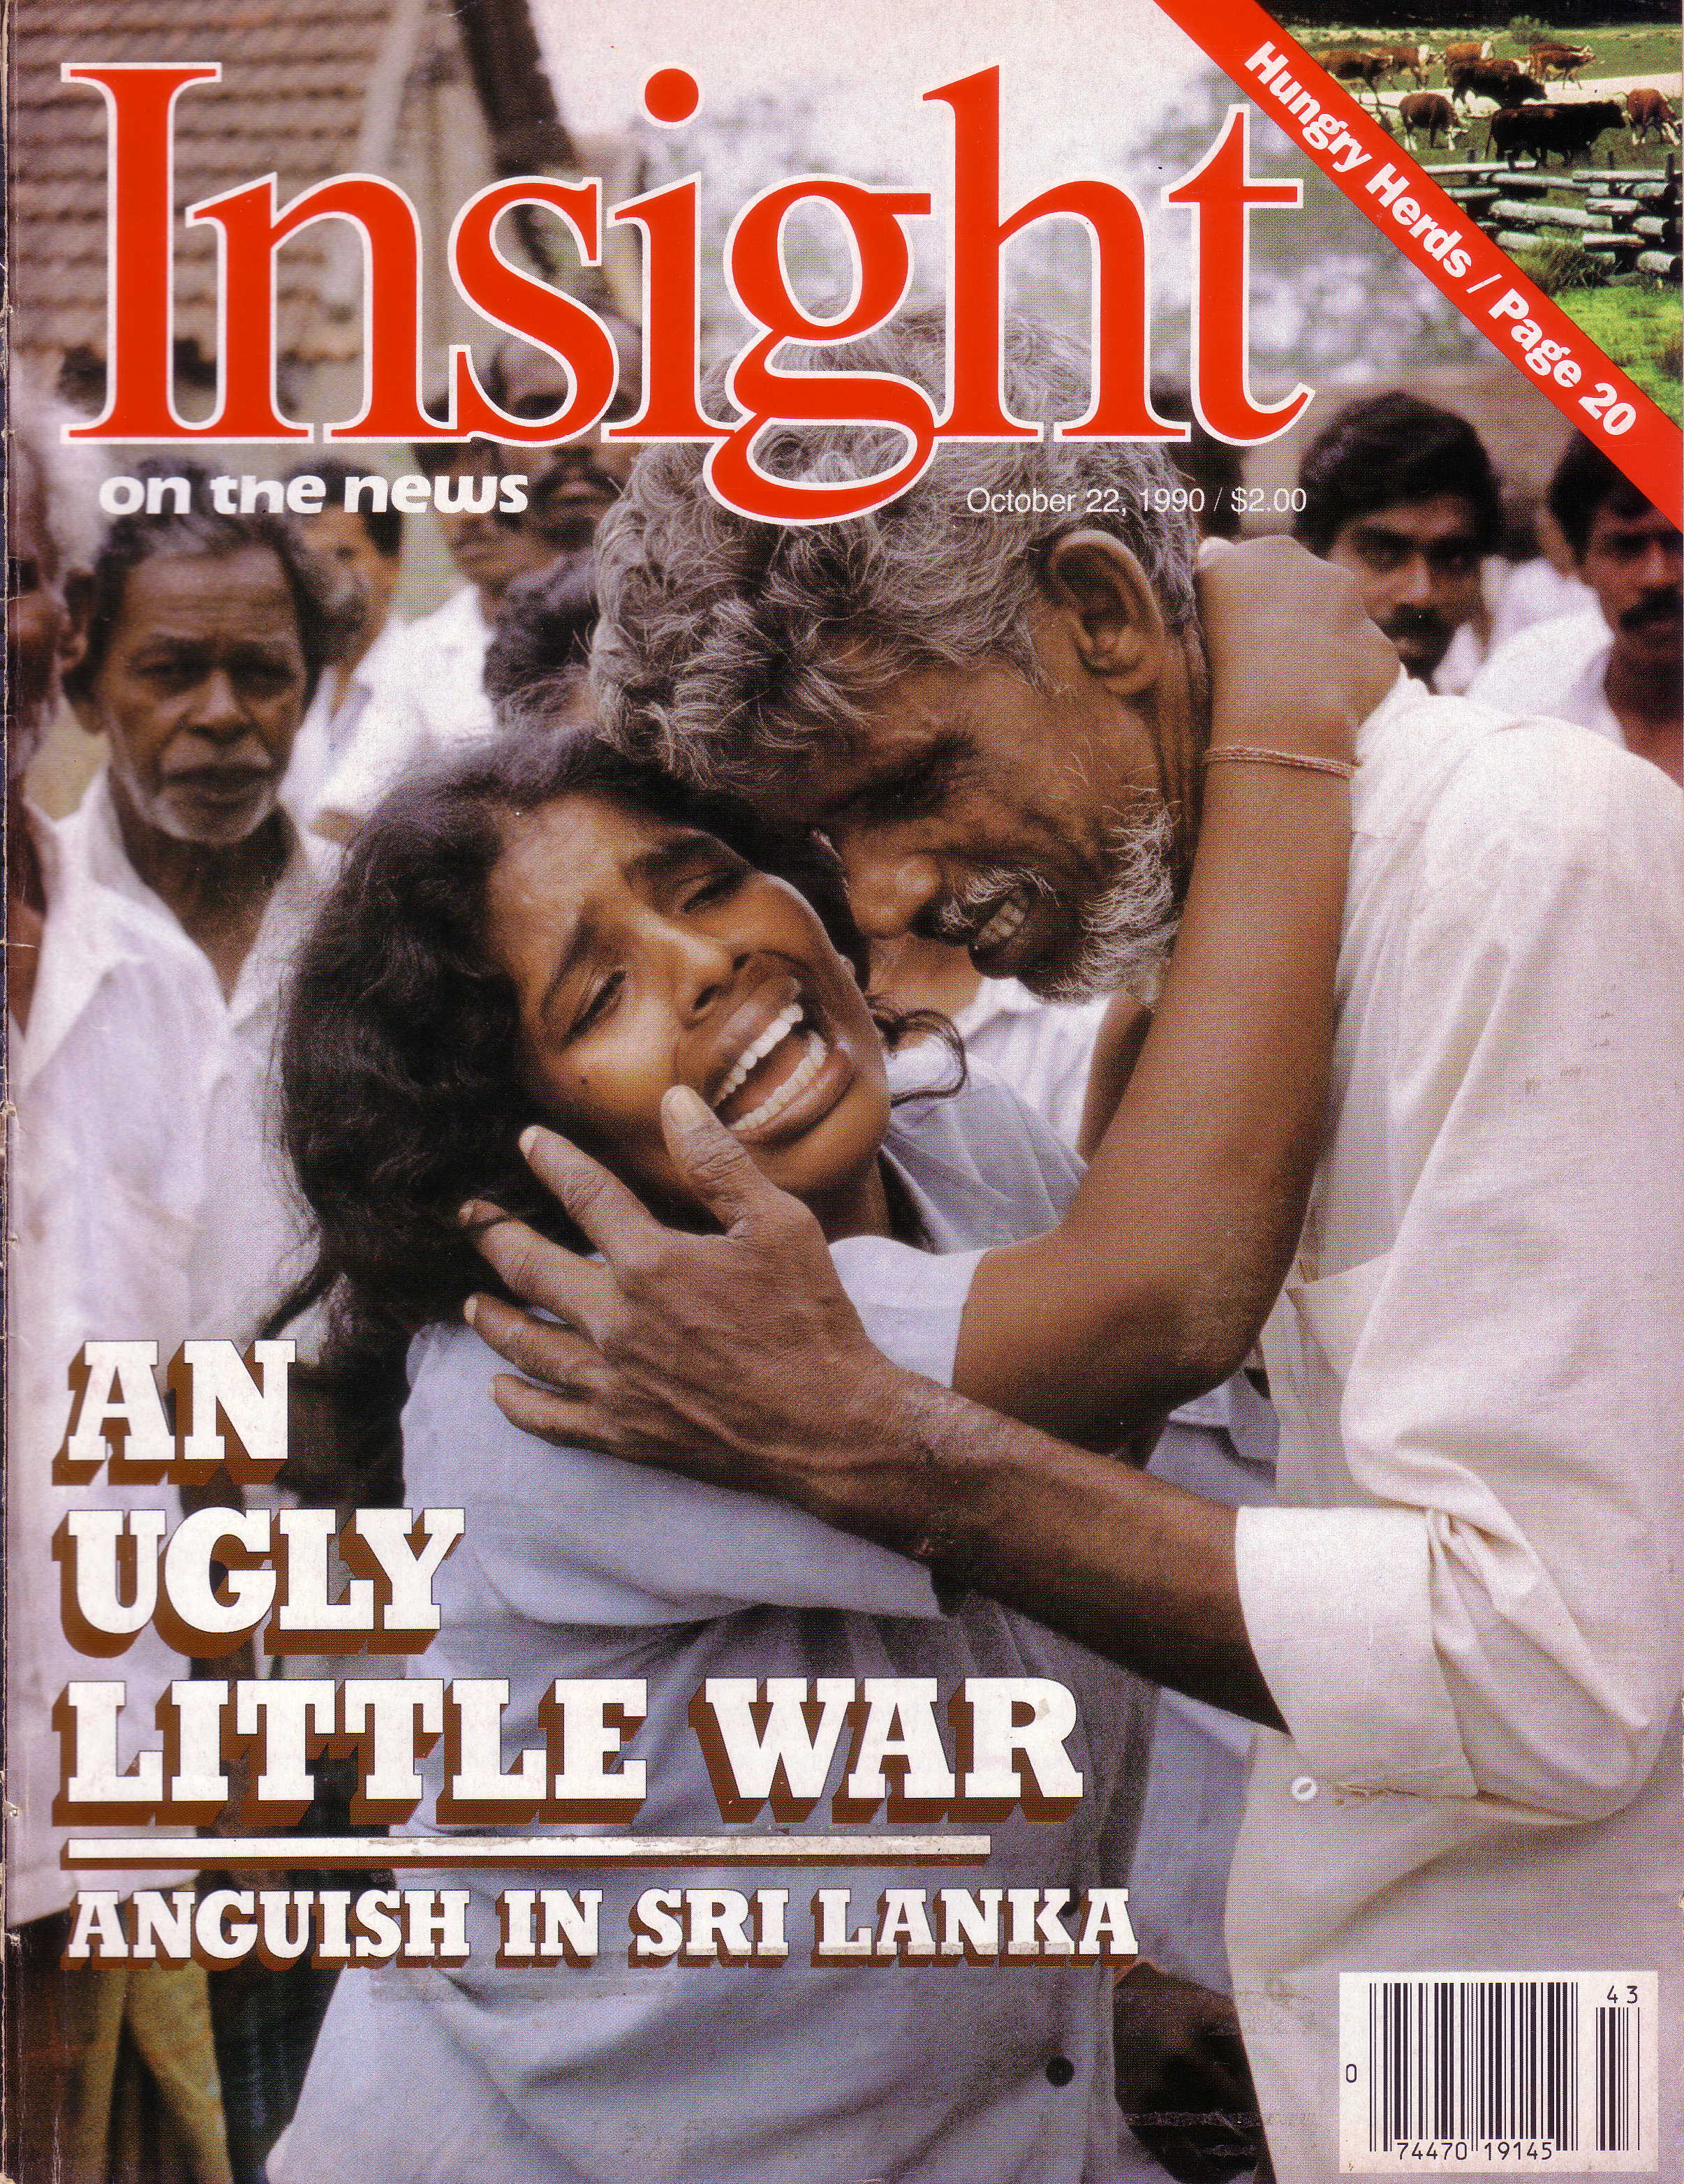 Insight magazine Oct 22, 1990 cover